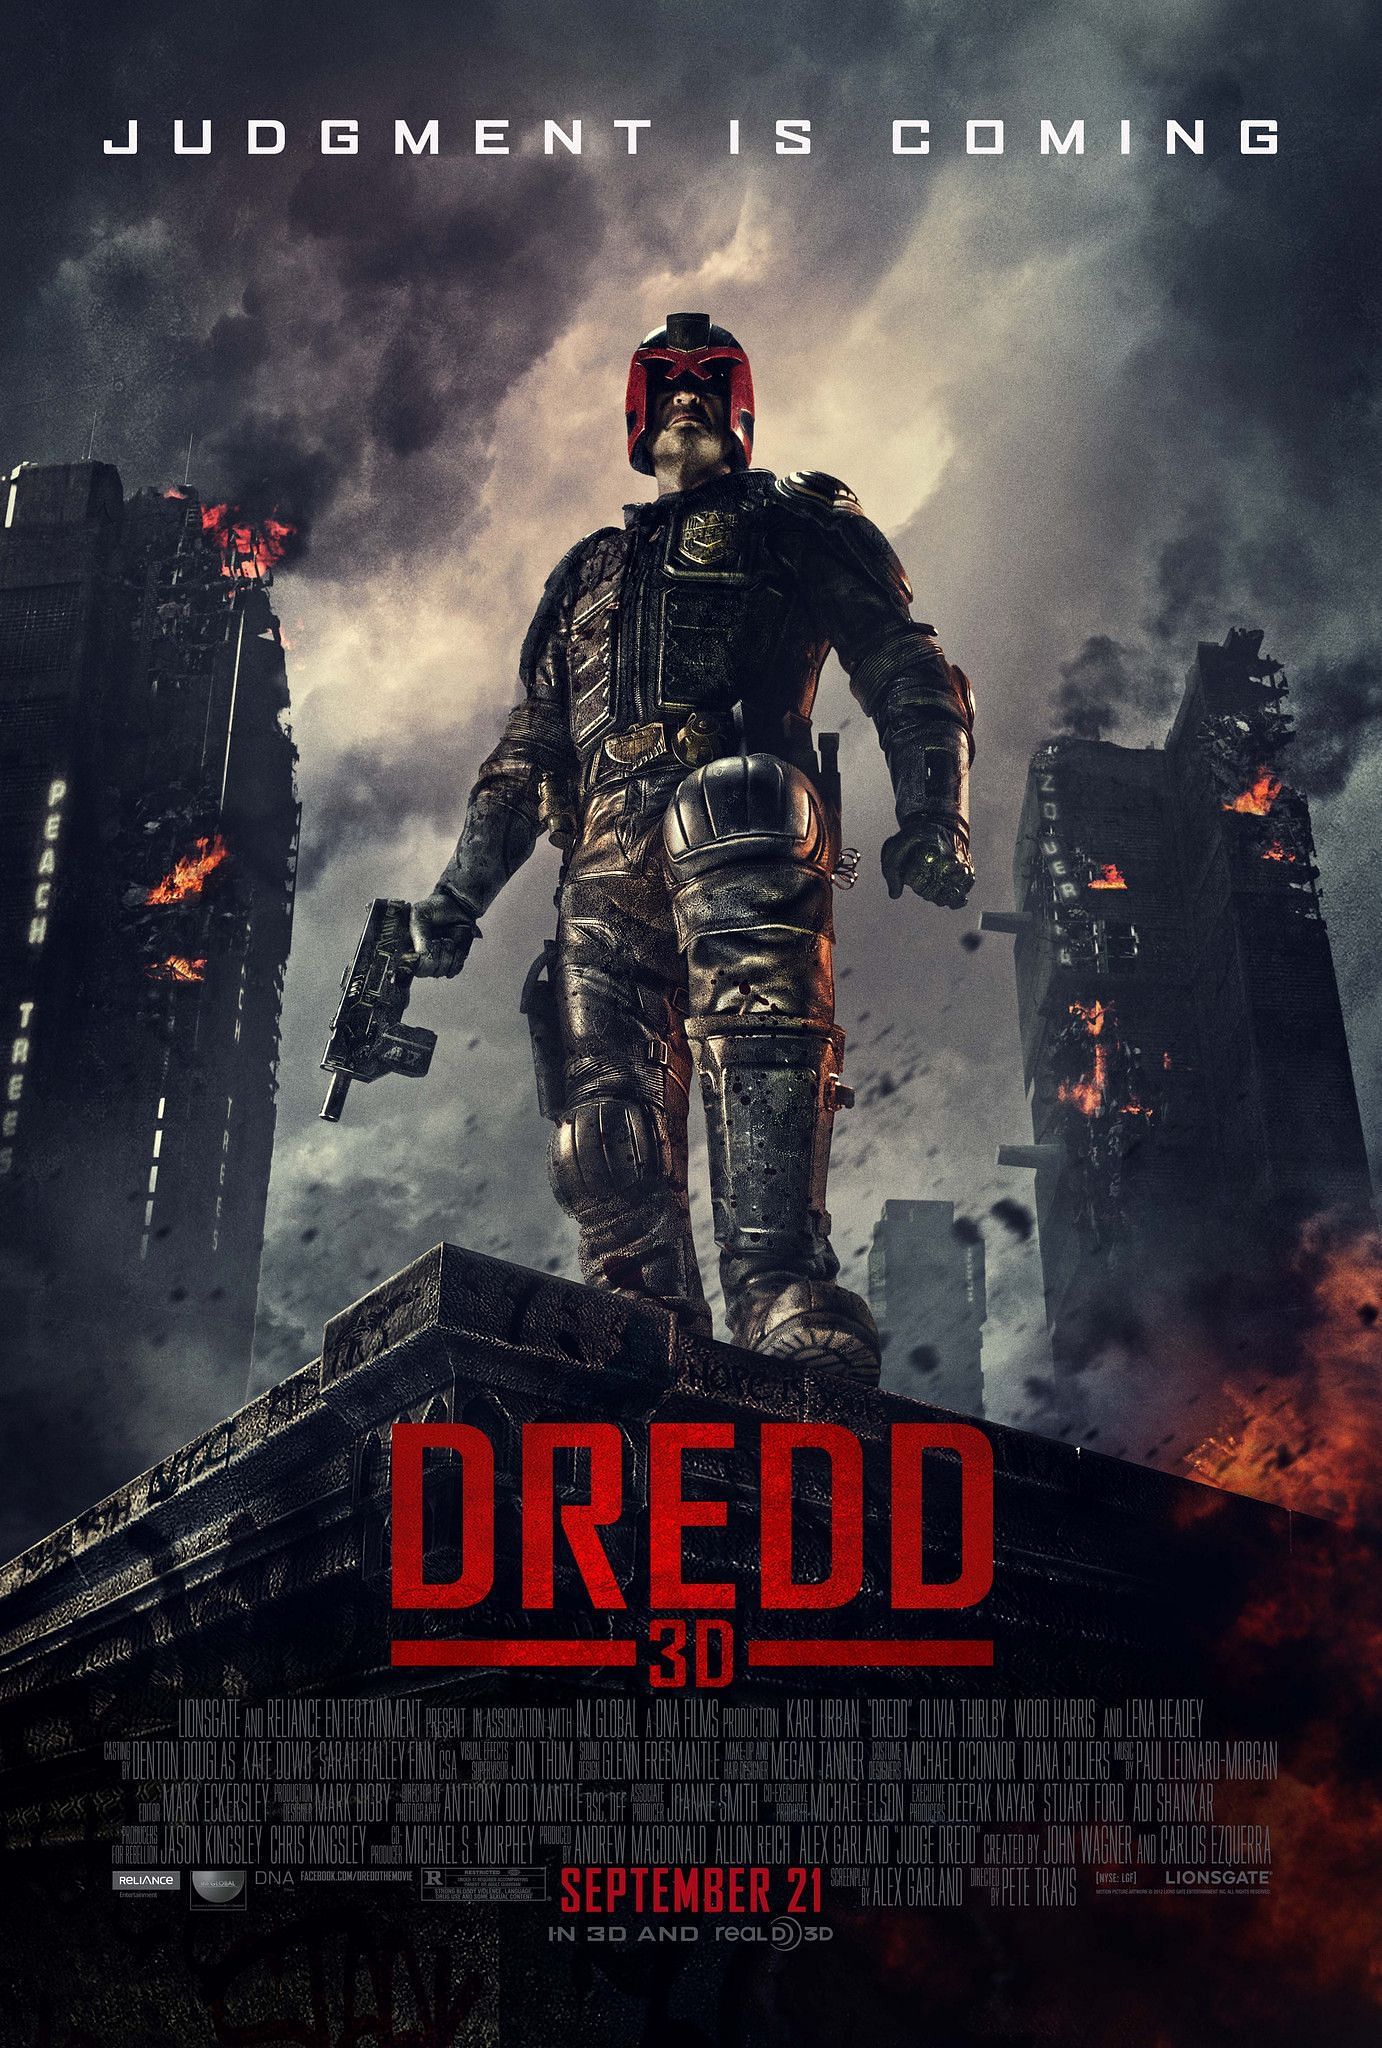 Dredd, 2012 (Image via Lionsgate)